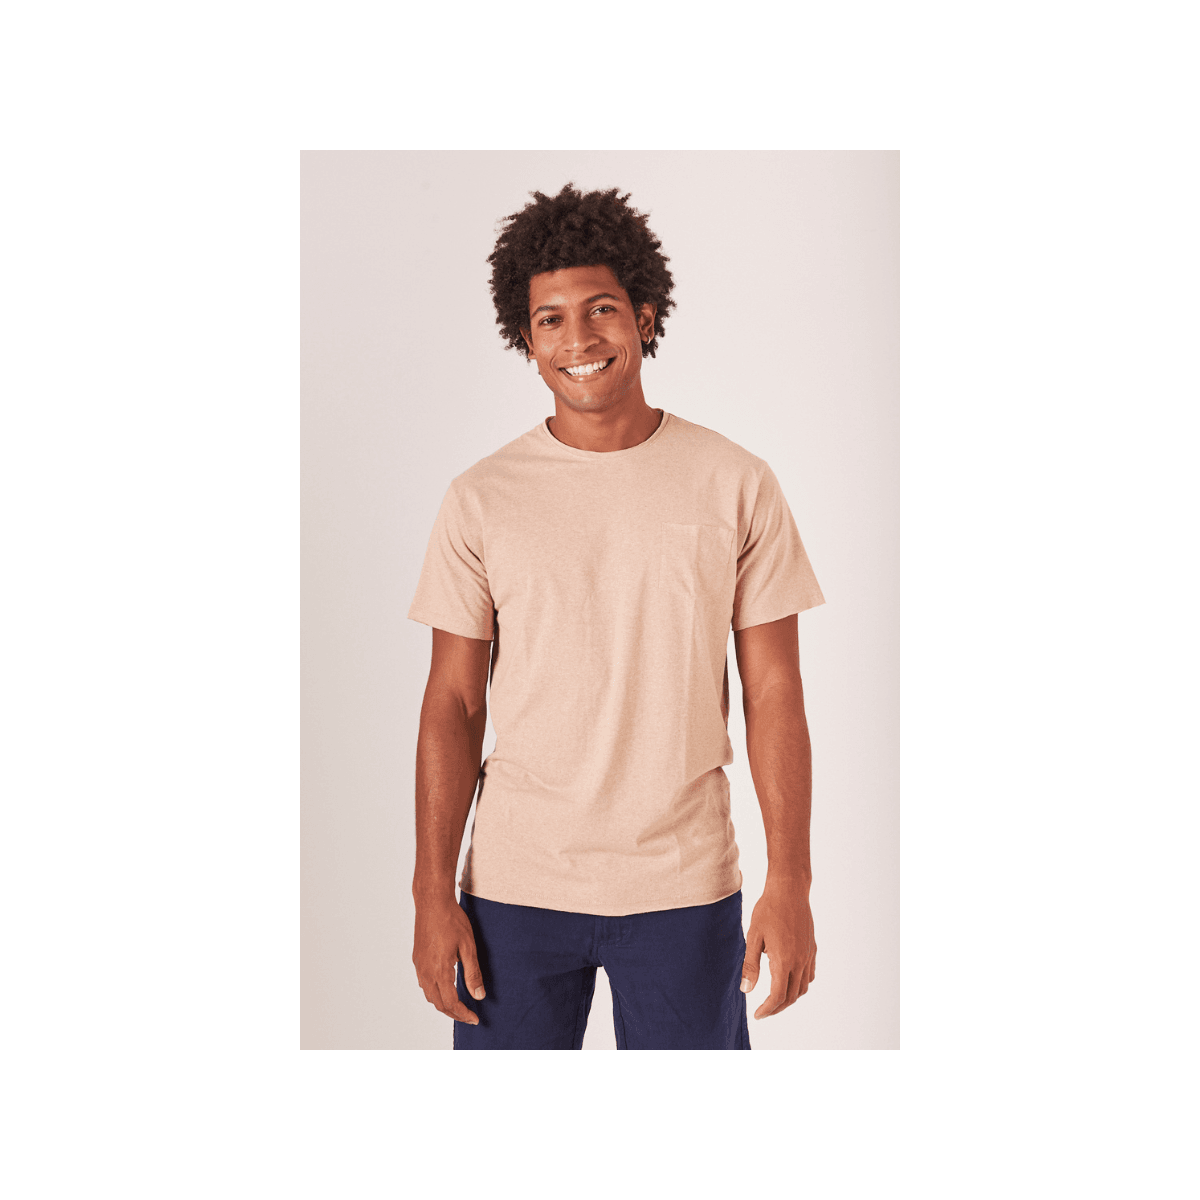 Camiseta Malha Terra - Corte a Fio -Tingimento Natural